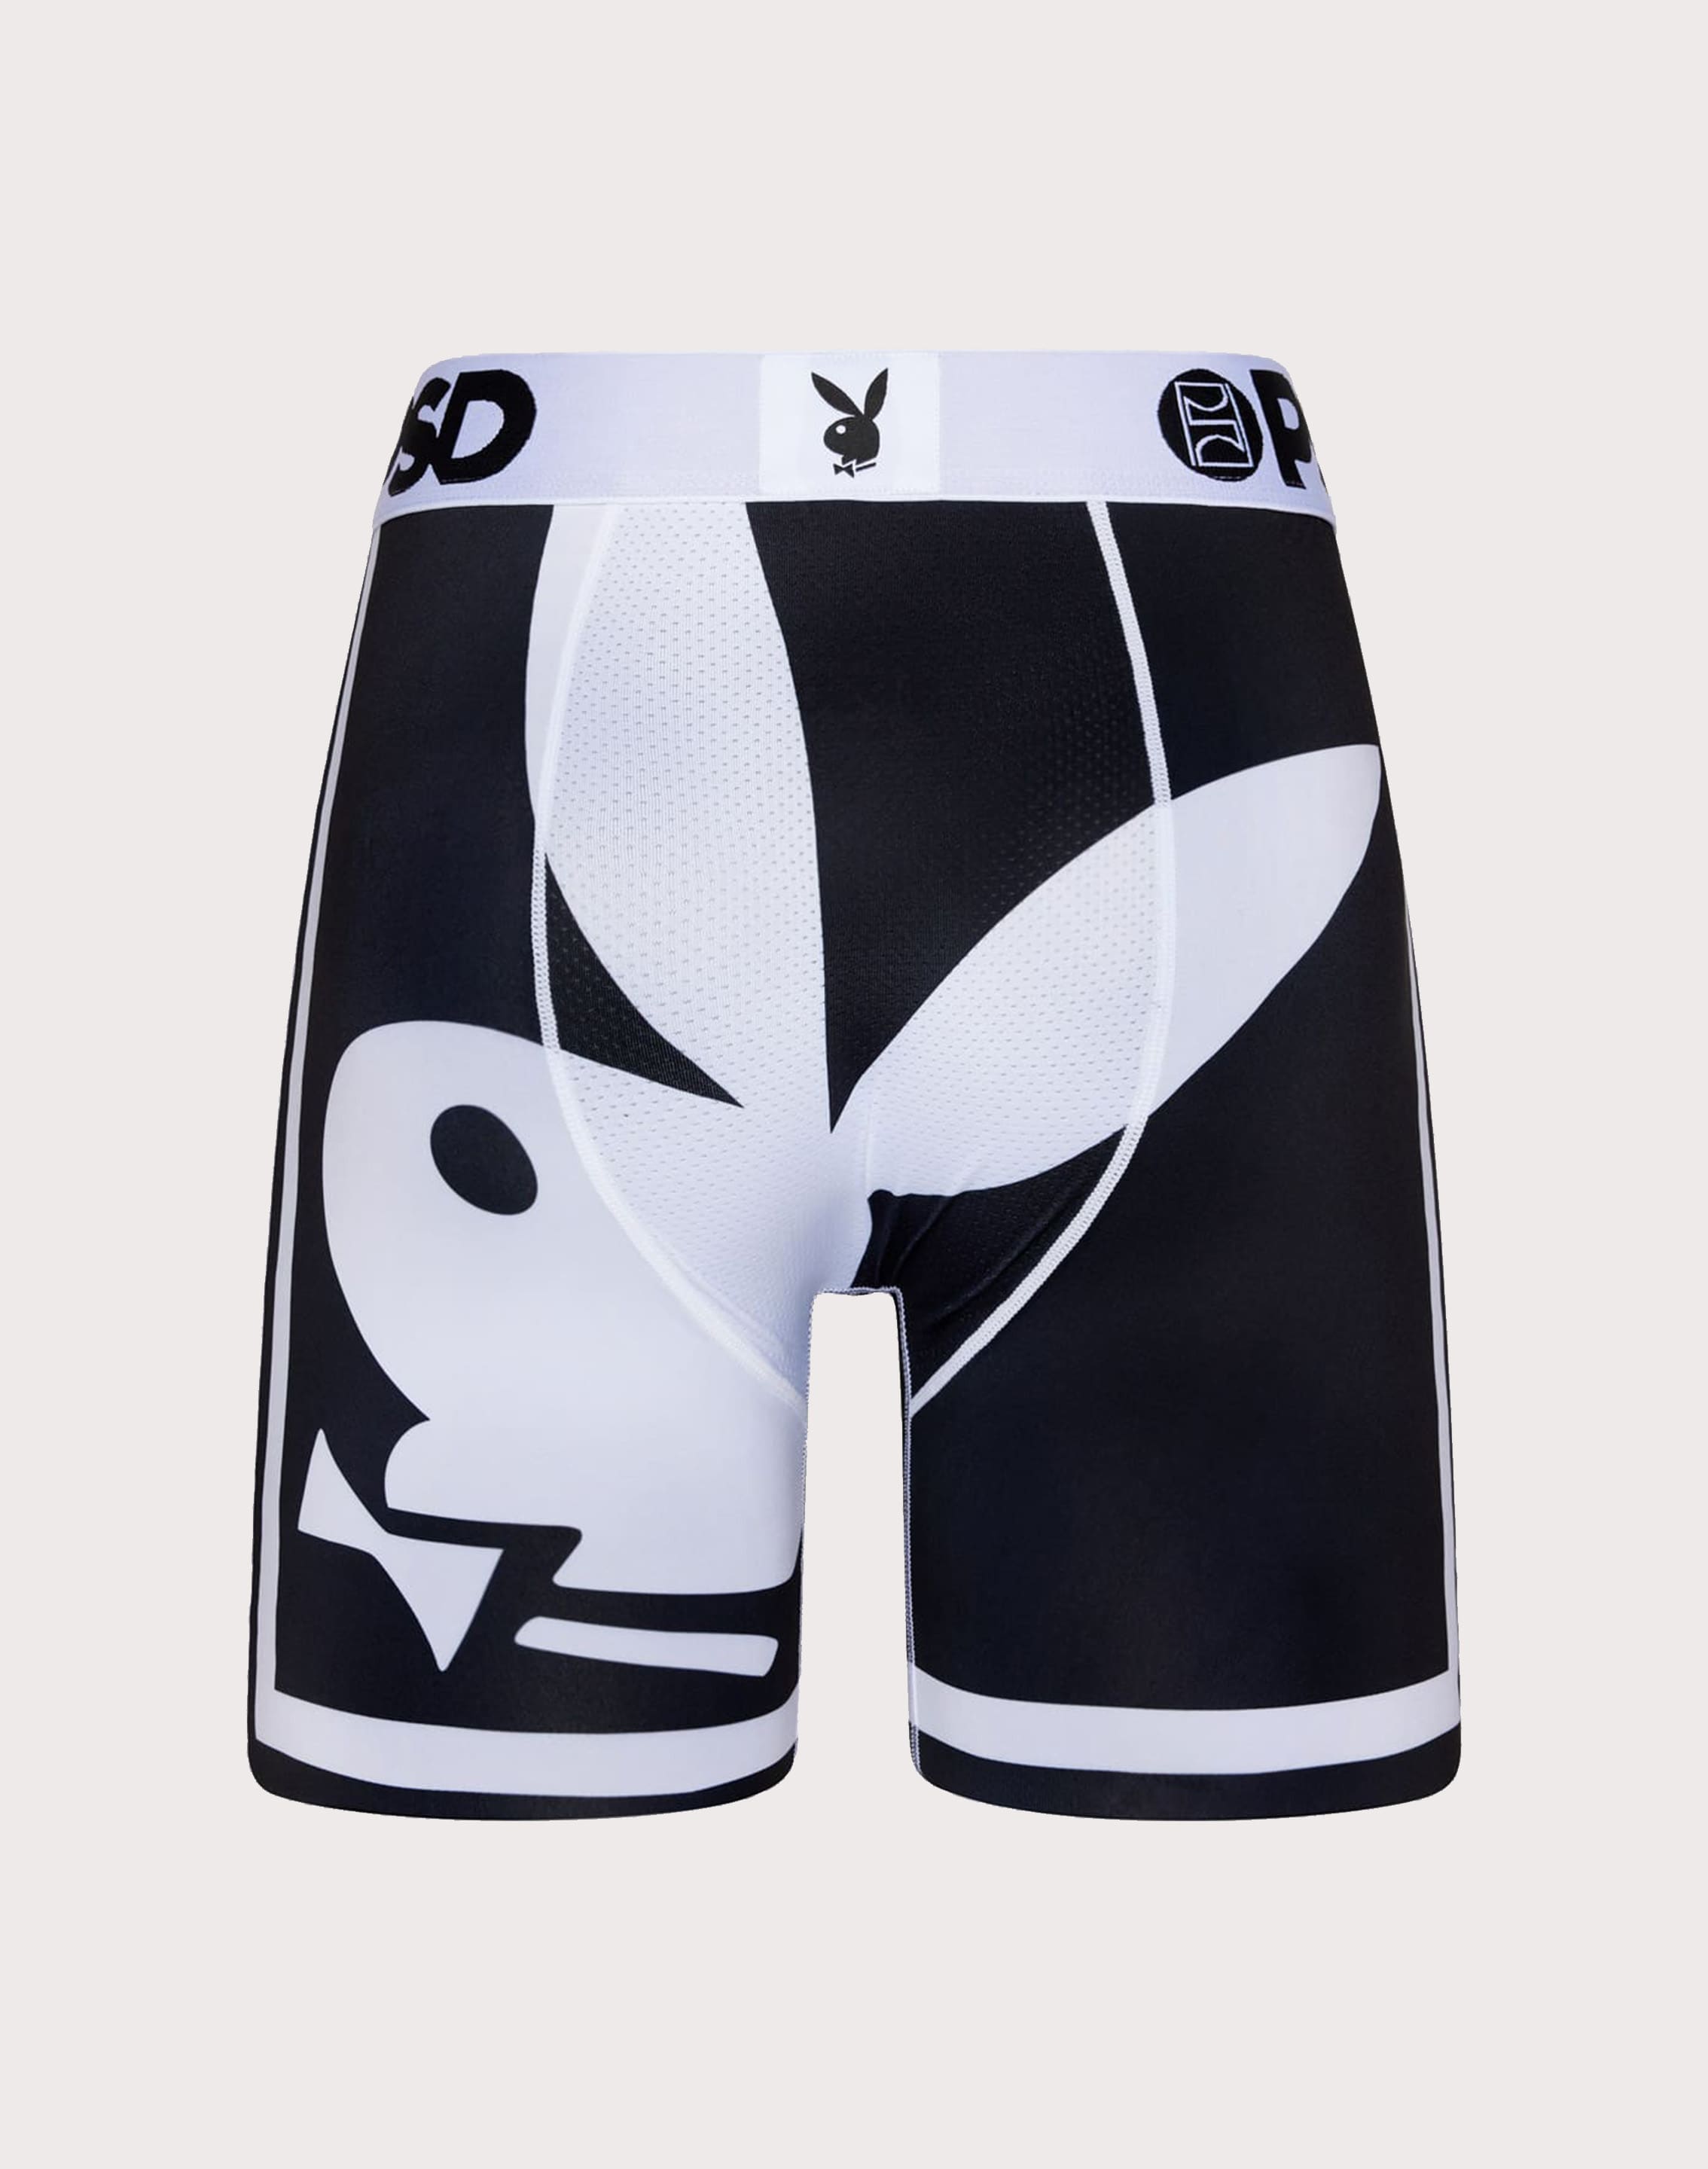 Psd Underwear Playboy Big Bunny Boxer Briefs – DTLR